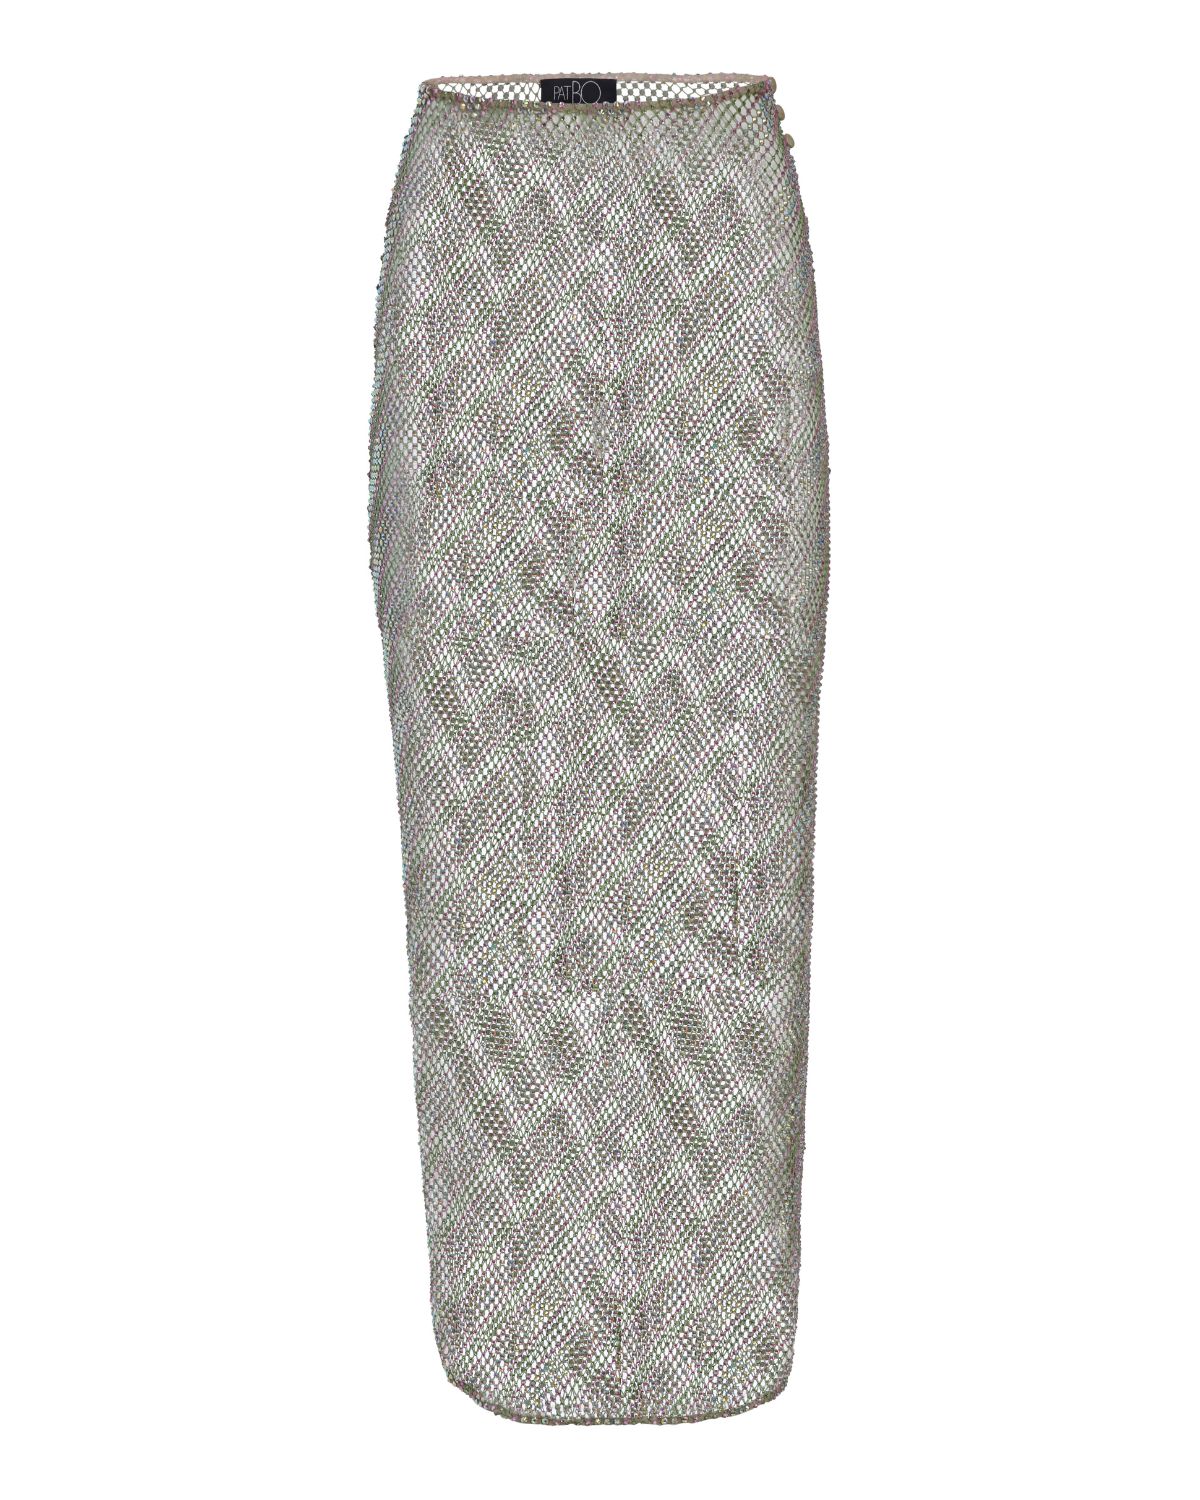 Rhinestone-Netted Midi Skirt (FINAL SALE)